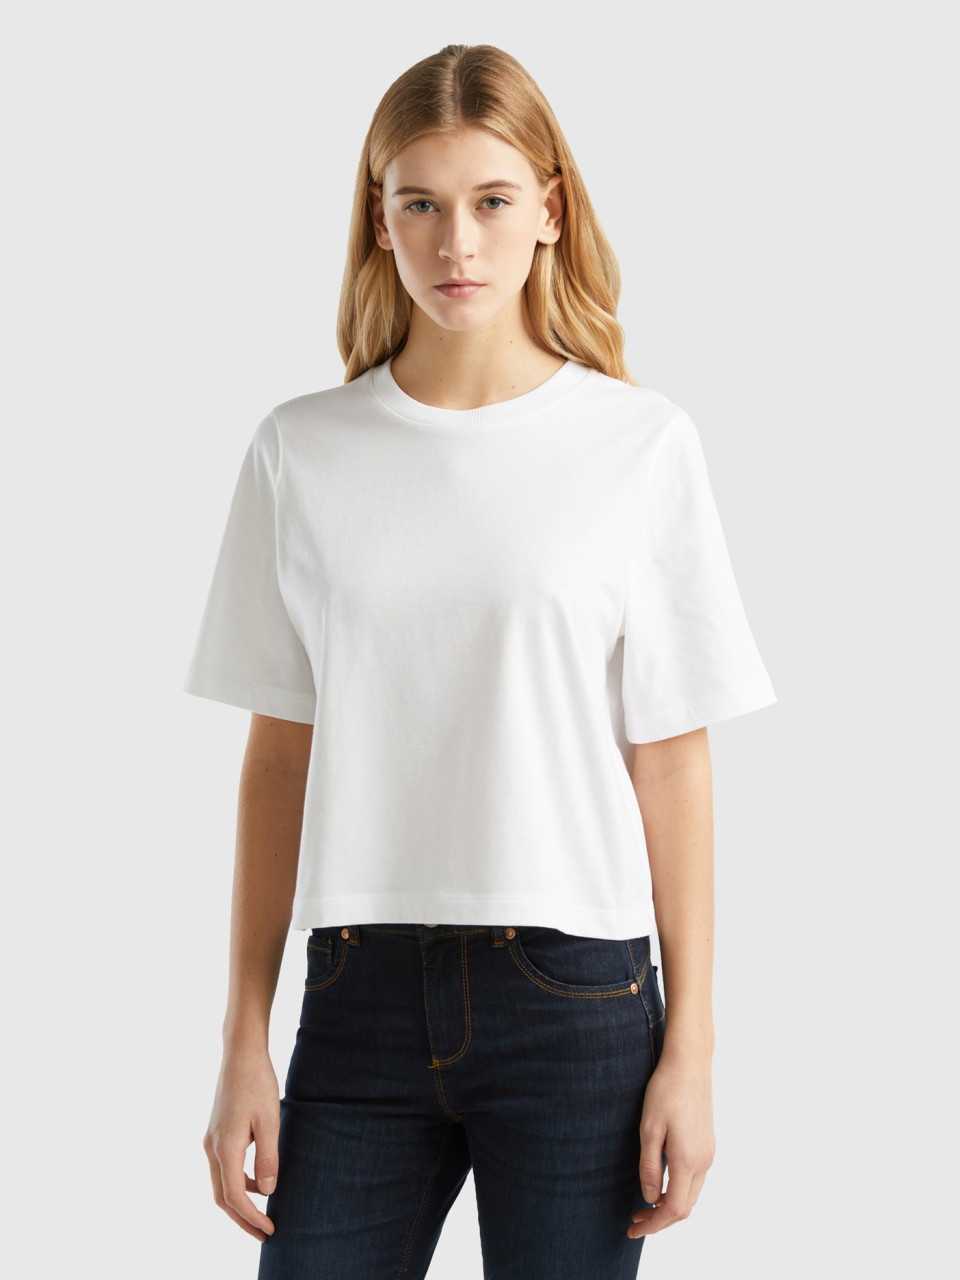 Benetton, 100% Cotton Boxy Fit T-shirt, White, Women